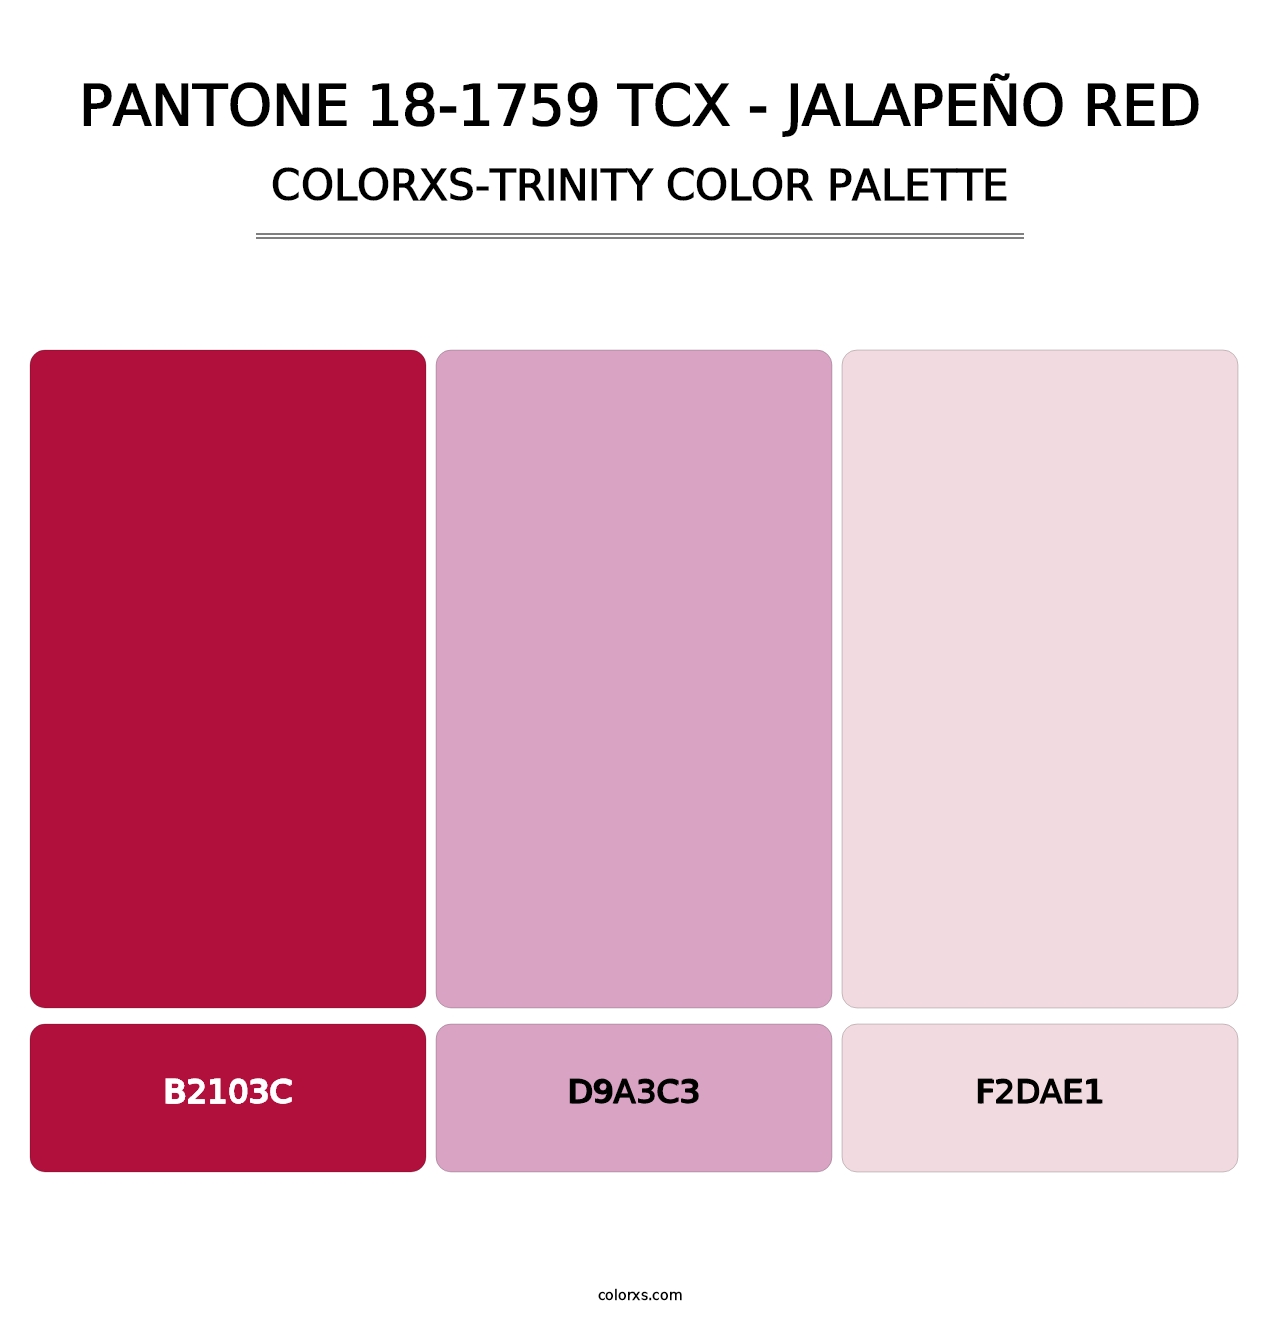 PANTONE 18-1759 TCX - Jalapeño Red - Colorxs Trinity Palette